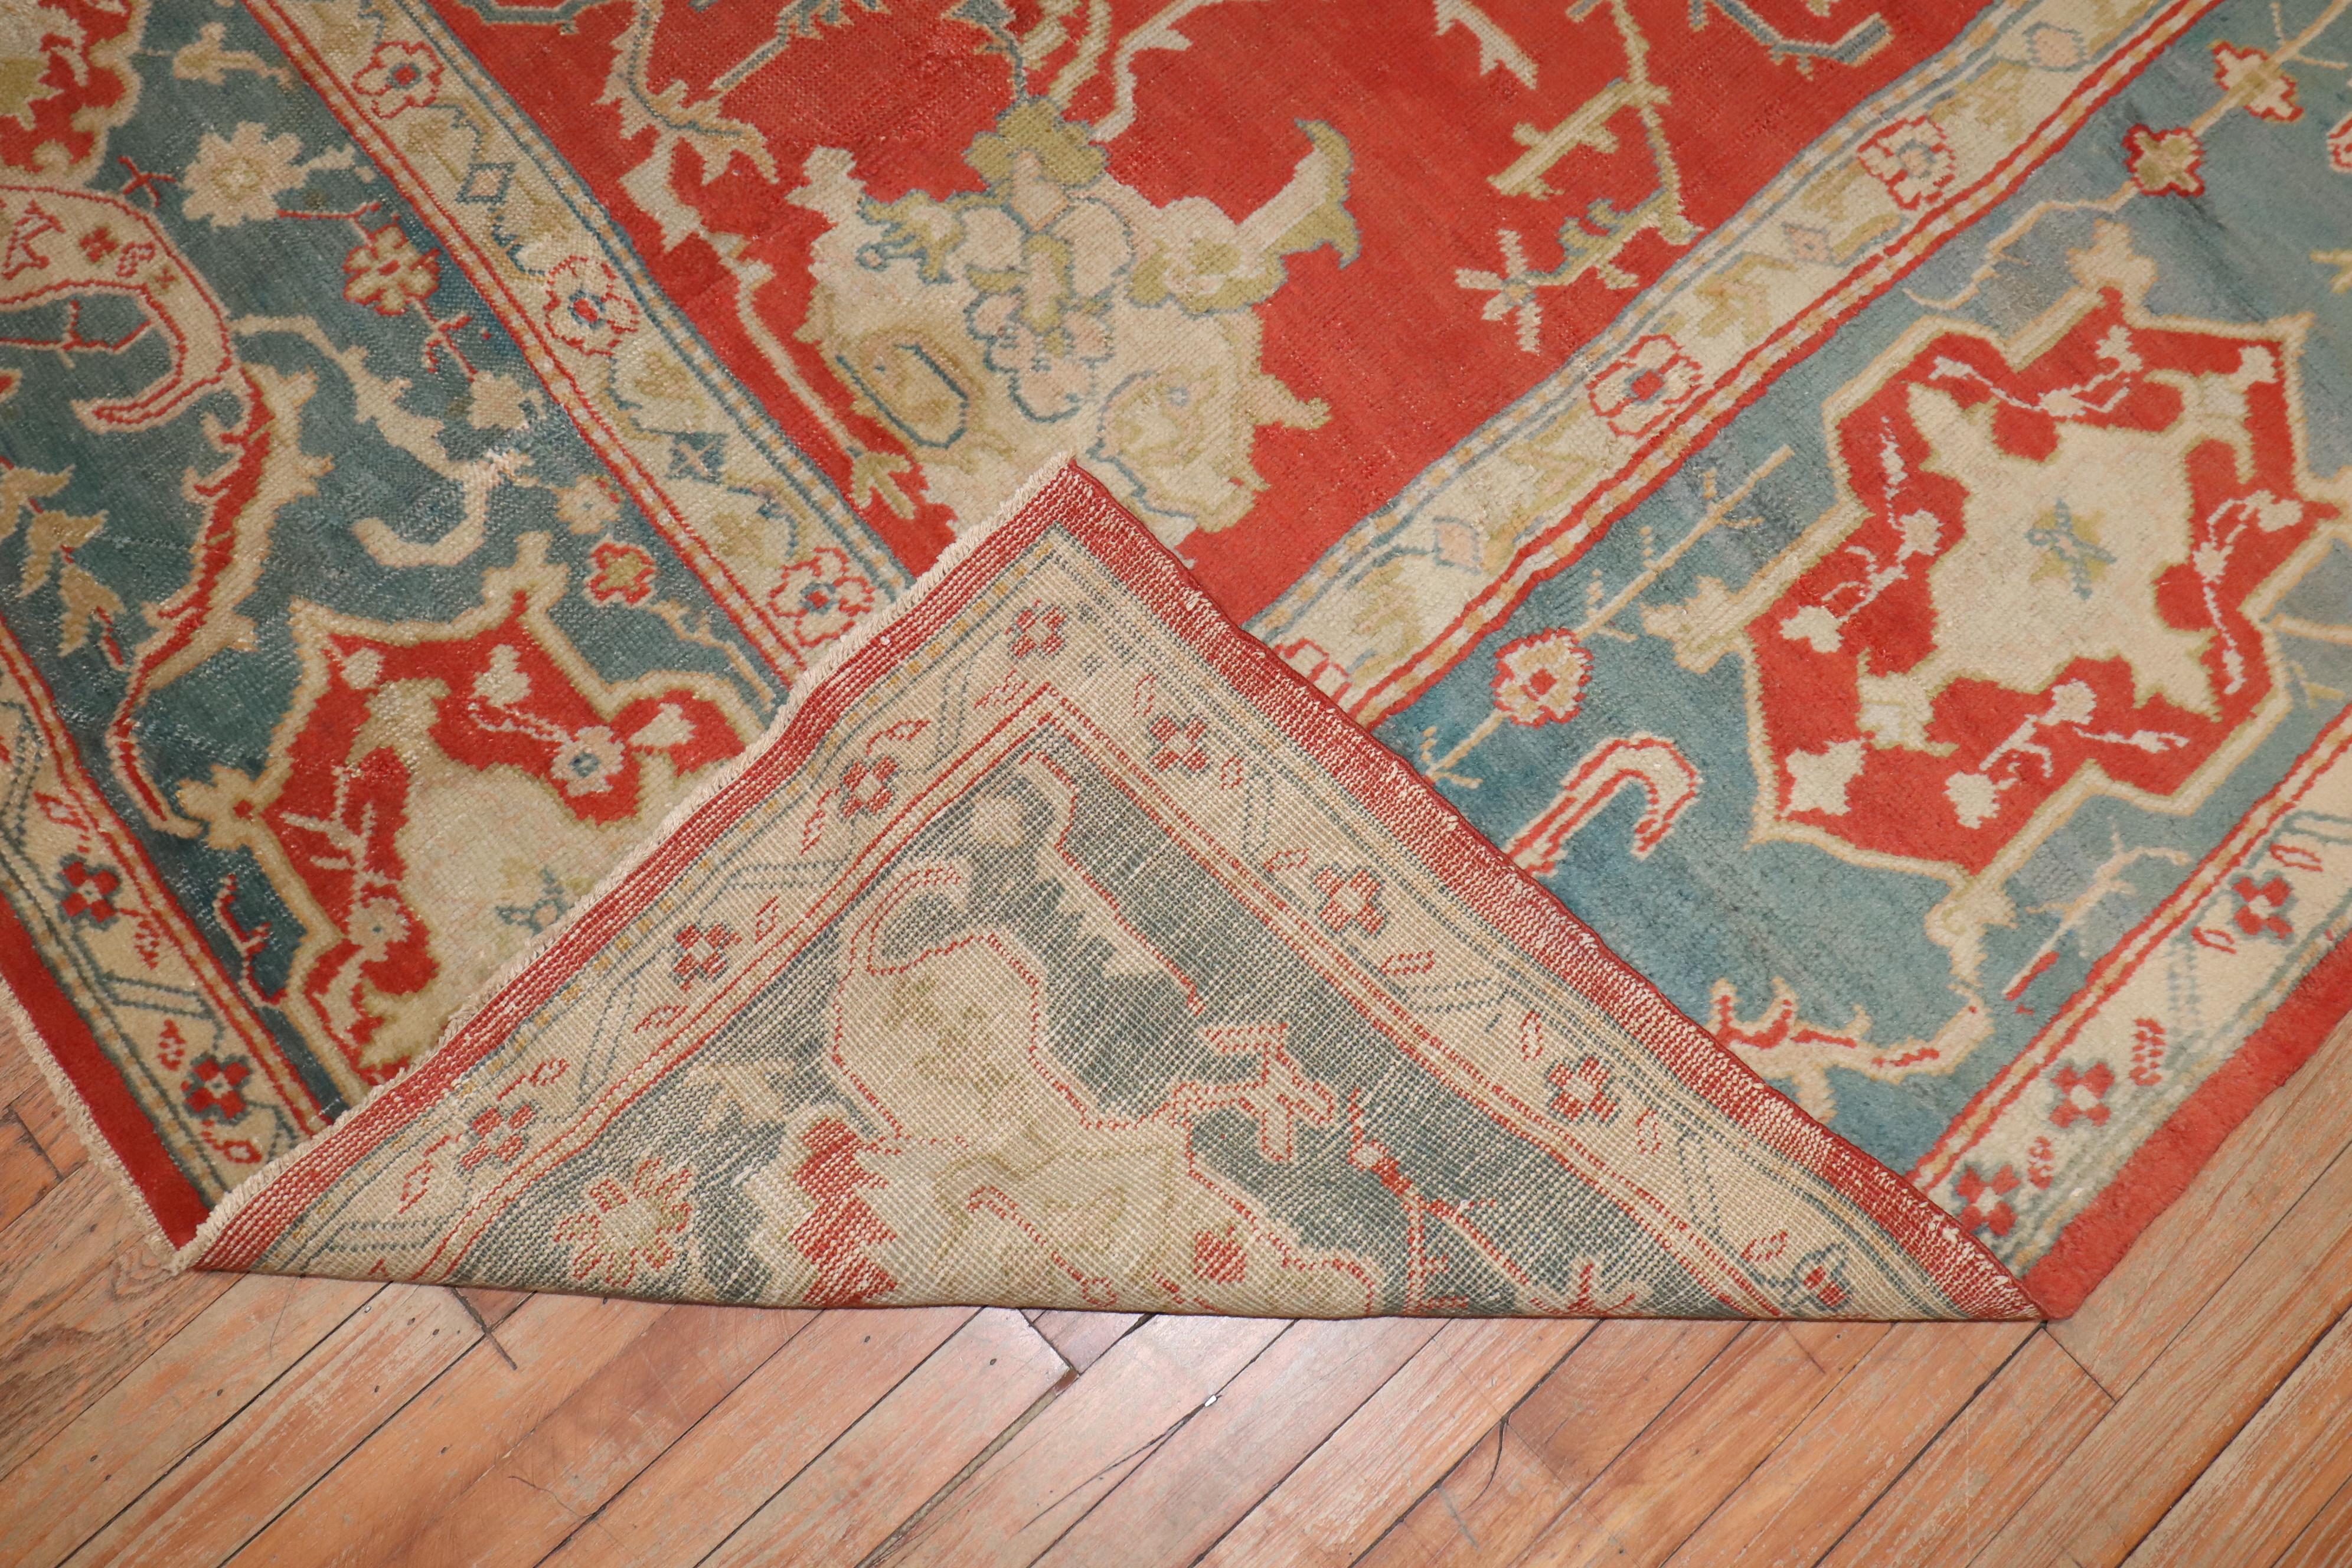 An early 20th-century antique Oushak carpet

Measures: 9'11” x 13'5”.